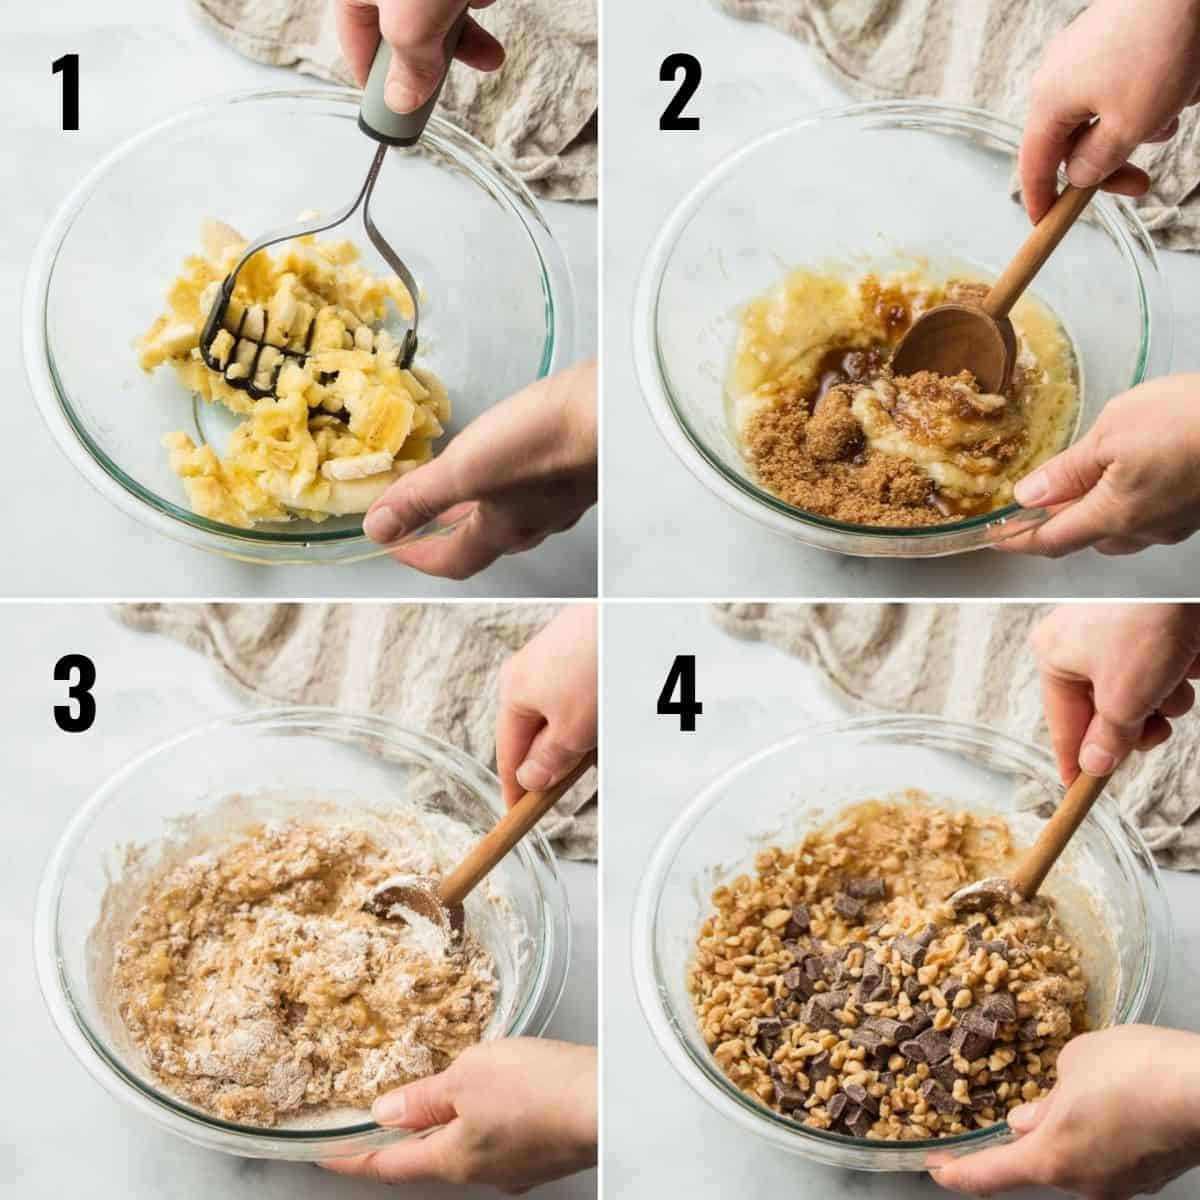 Collage showing 4 steps for making Vegan Banana Muffin batter.